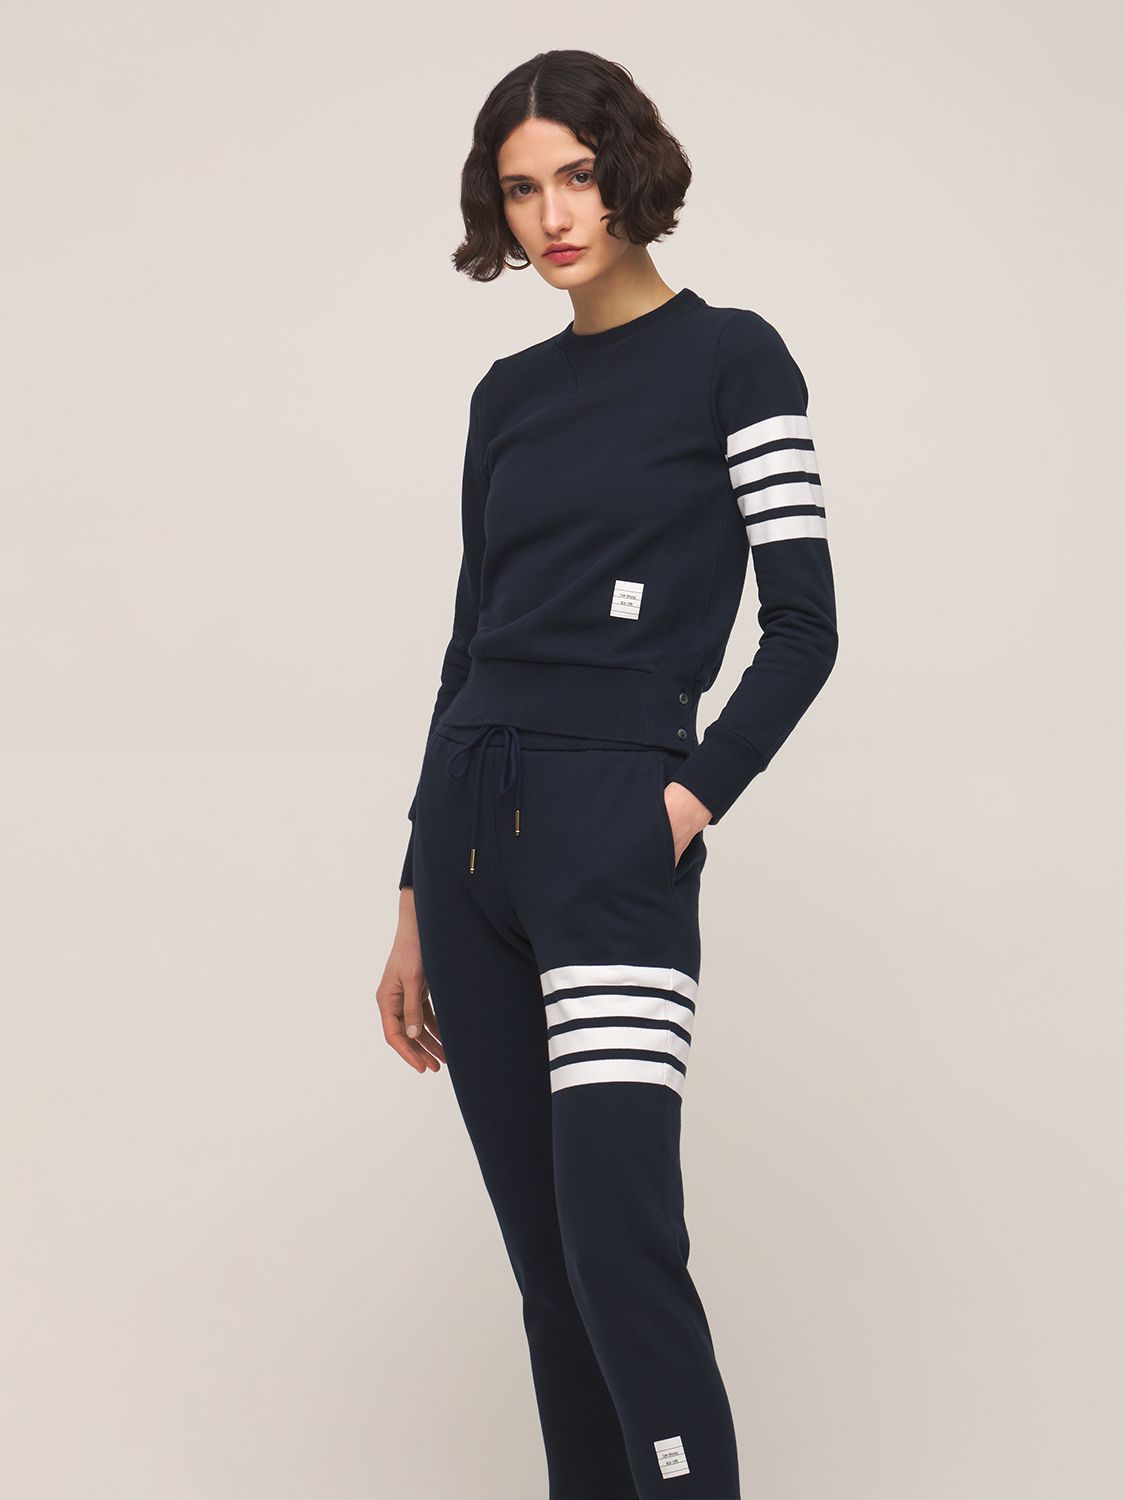  Thom Browne Intarsia Stripes Cotton Sweatpants 